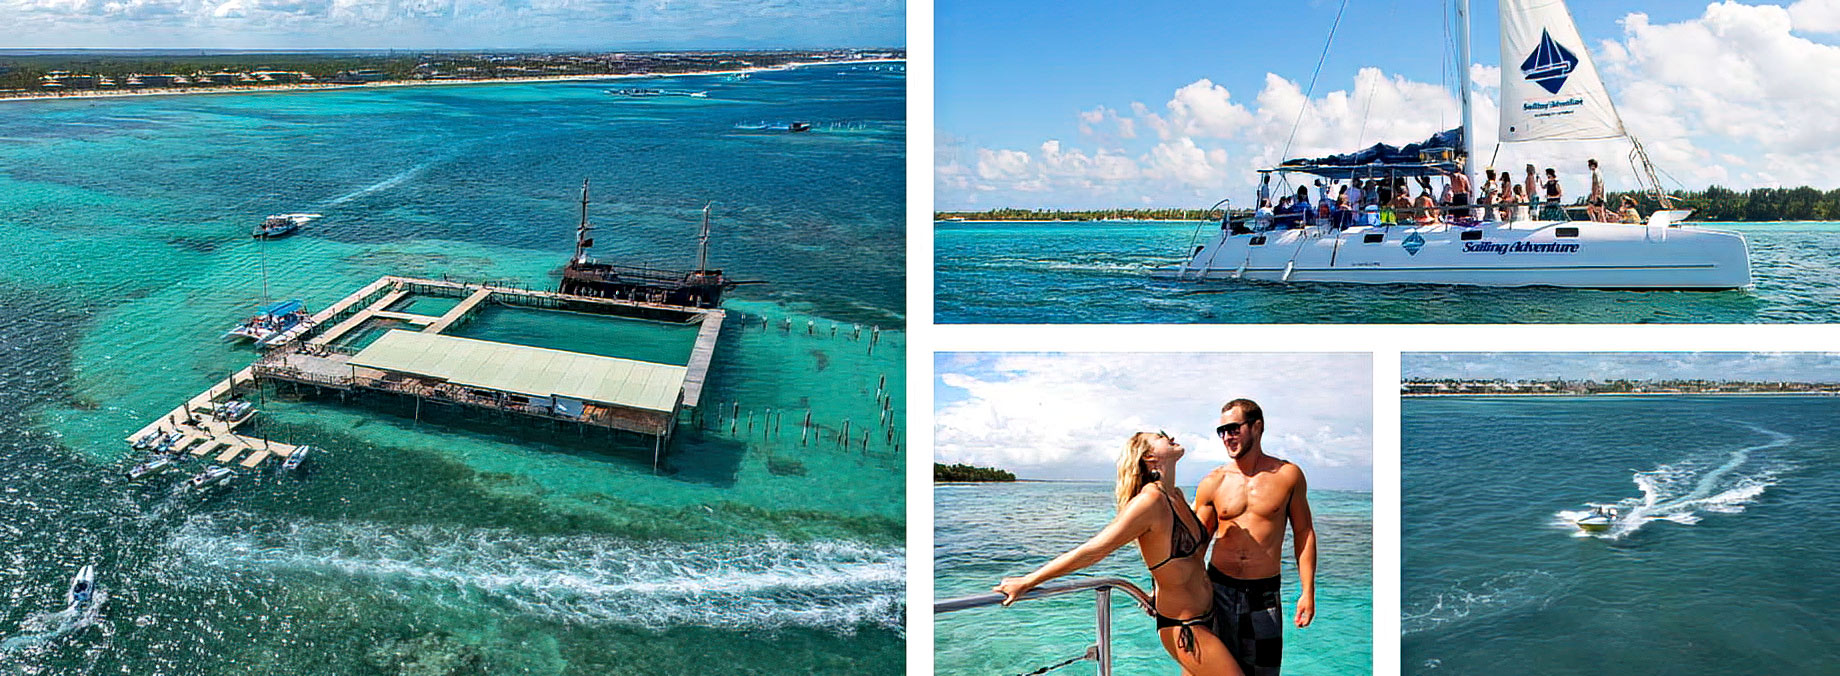 Catamaran Tour, Snorkeling Punta Cana, Speed Boat at Ocean Adventures Punta Cana, Dominican Republic